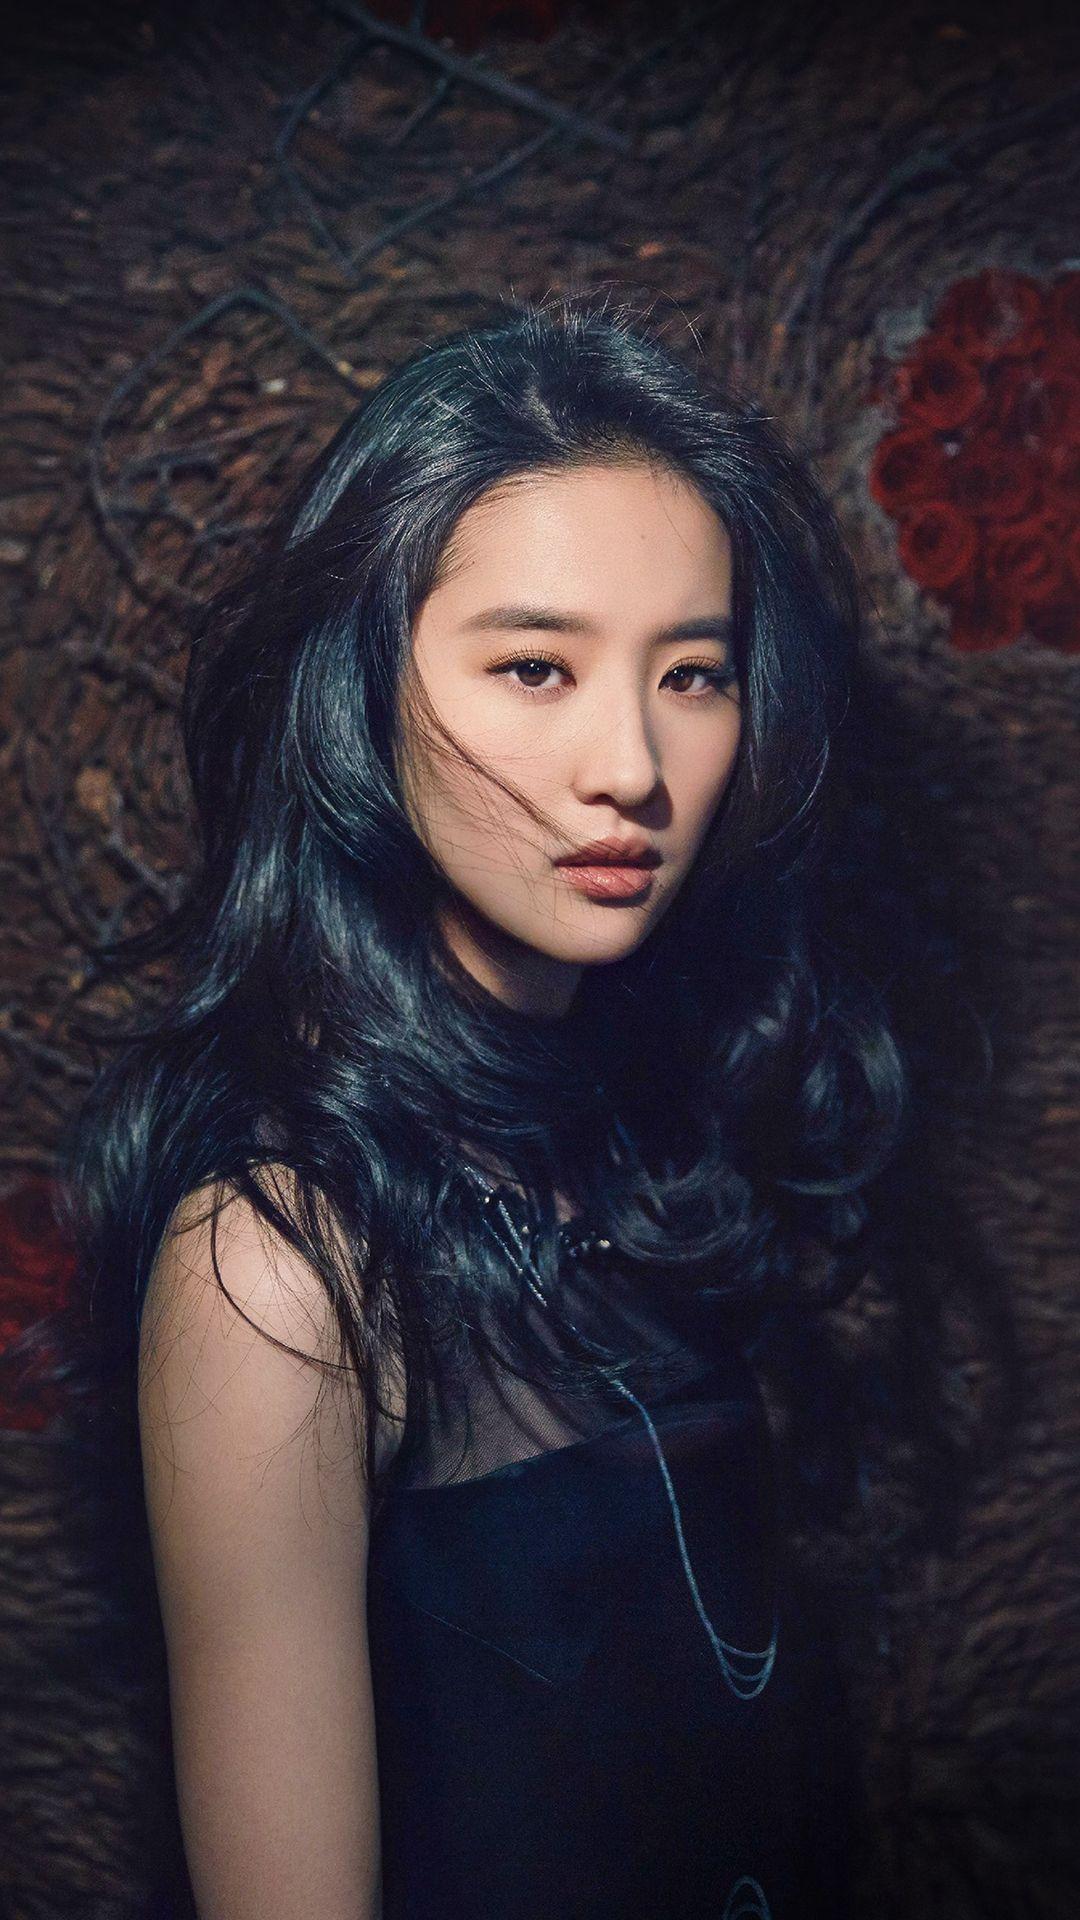 Girl Liu Yifei China Film Actress Model Singer Dark iPhone 6 Wallpaper Download. iPhone Wallpaper, iPad wallpaper On. Asian models female, Beauty, Asian beauty